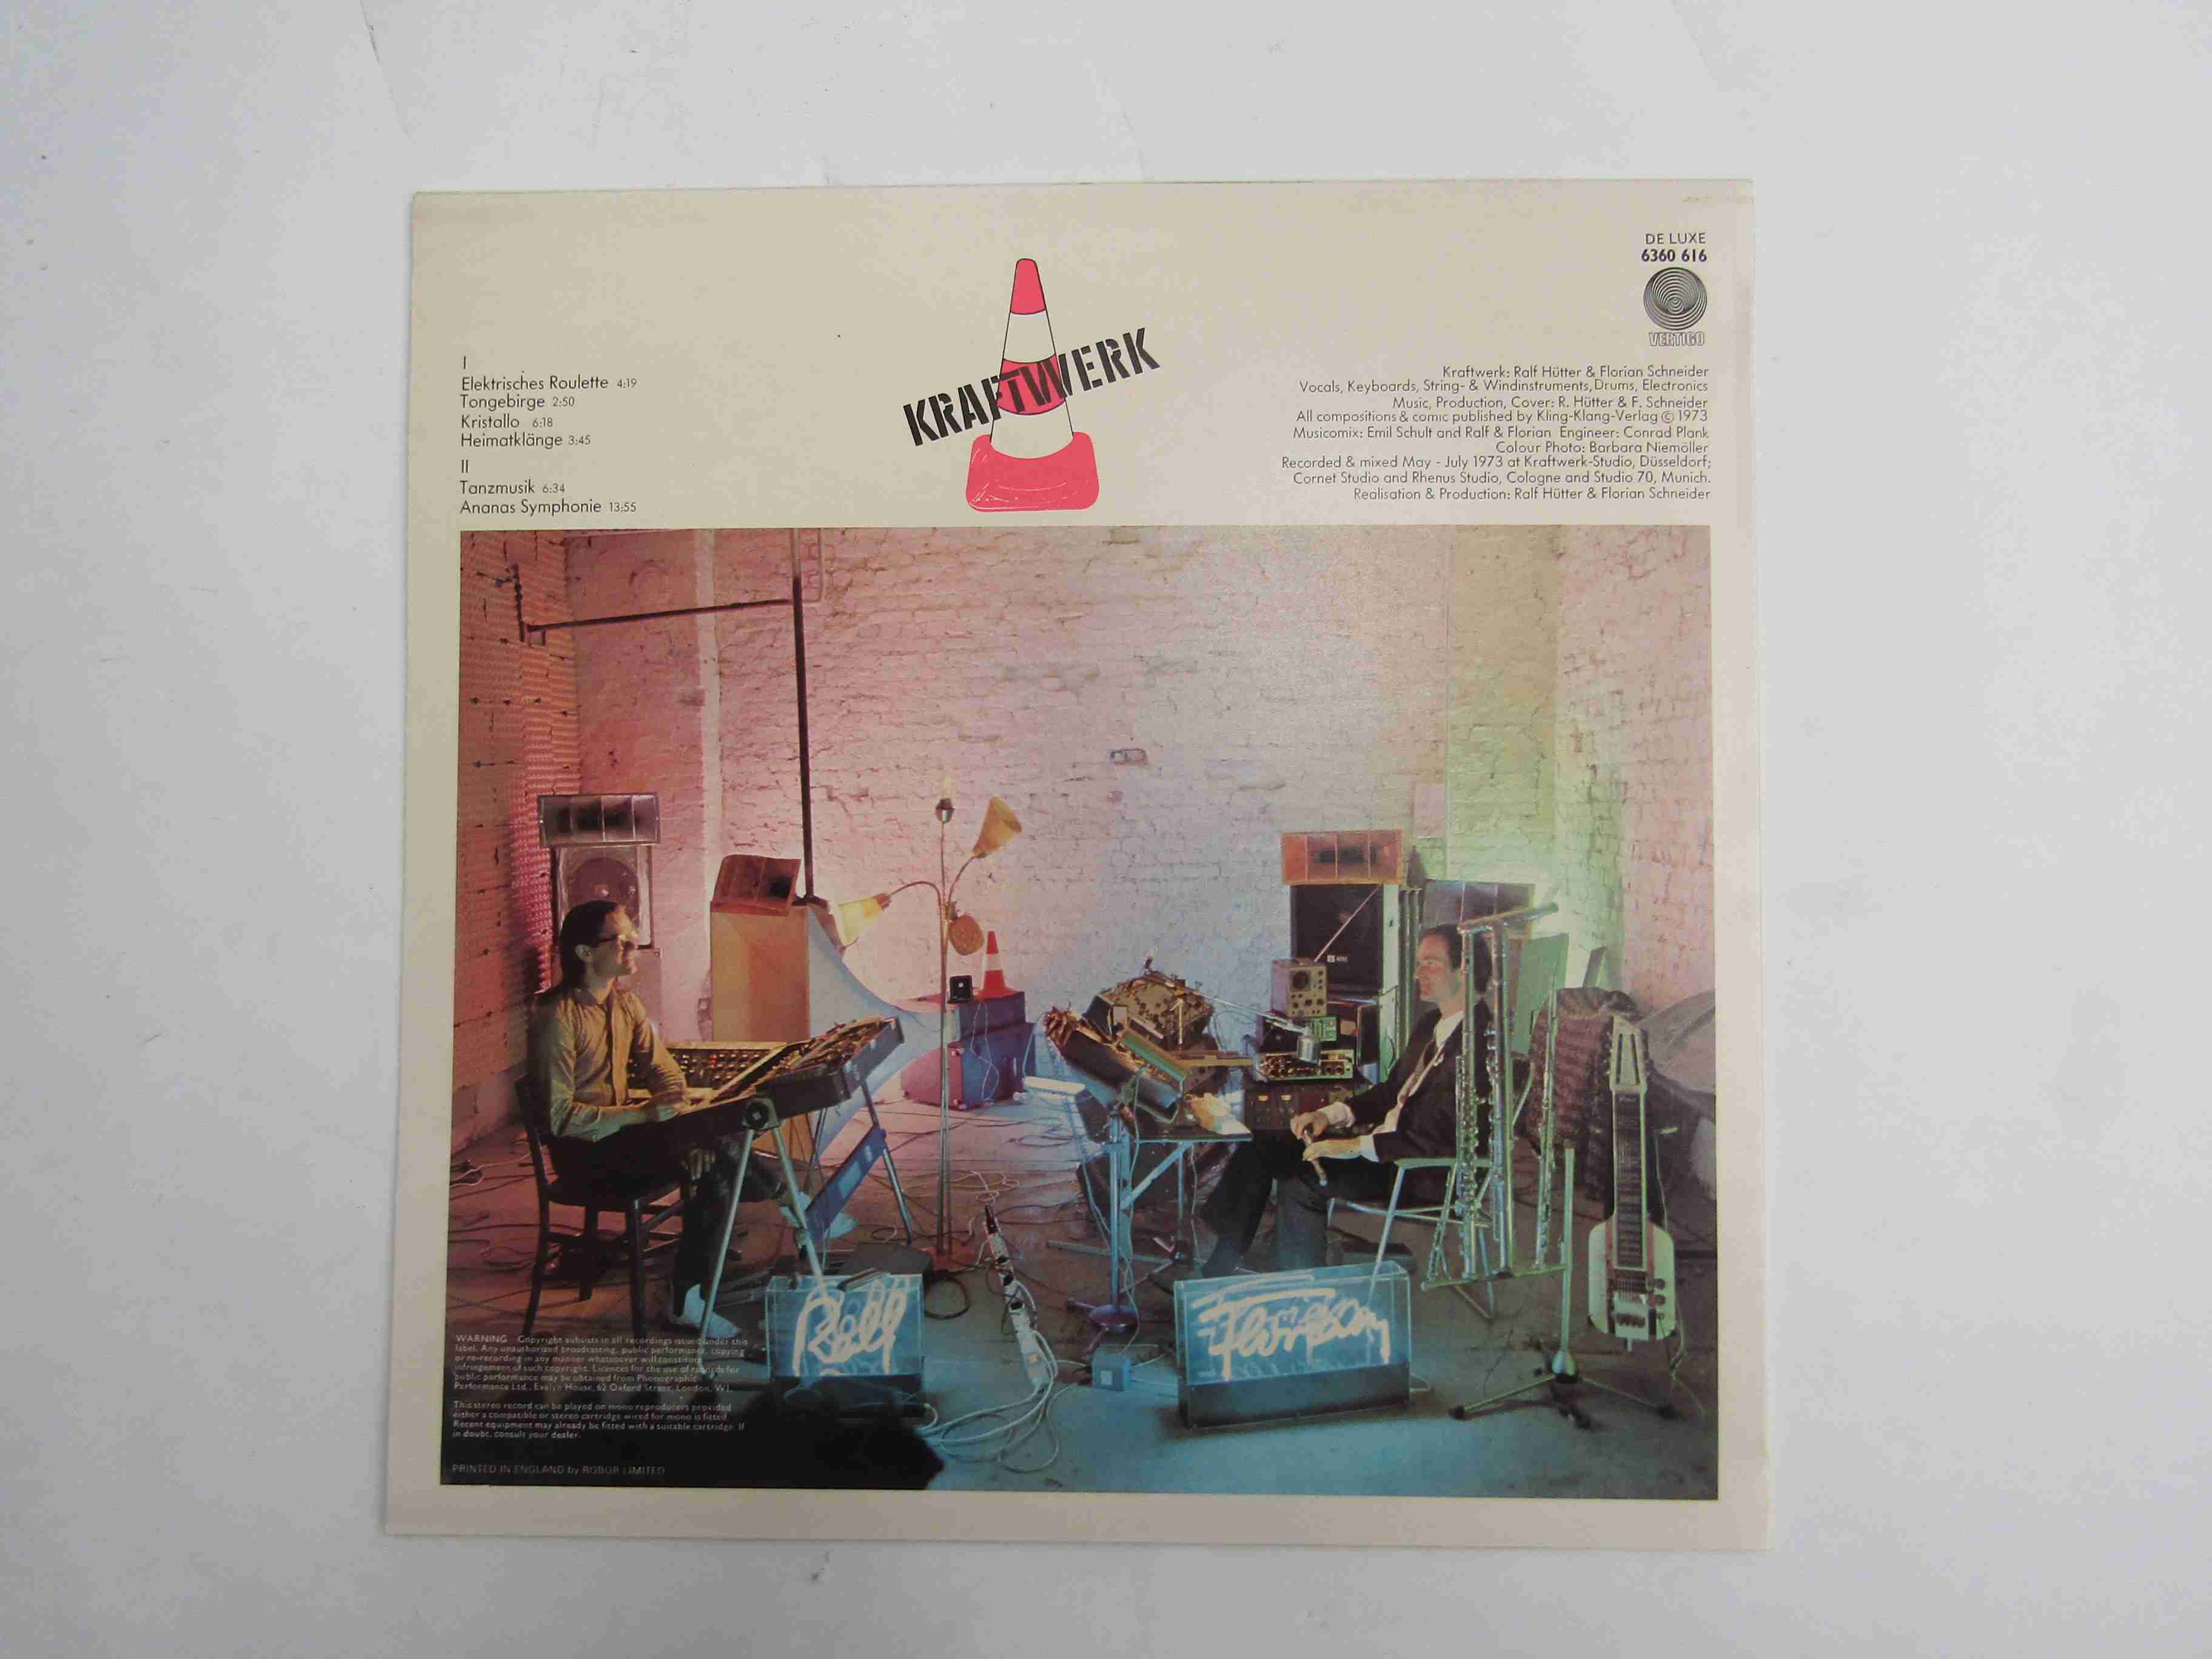 KRAFTWERK: 'Ralf And Florian' LP, 1973 UK first pressing, Vertigo 6360 616, - Image 2 of 3